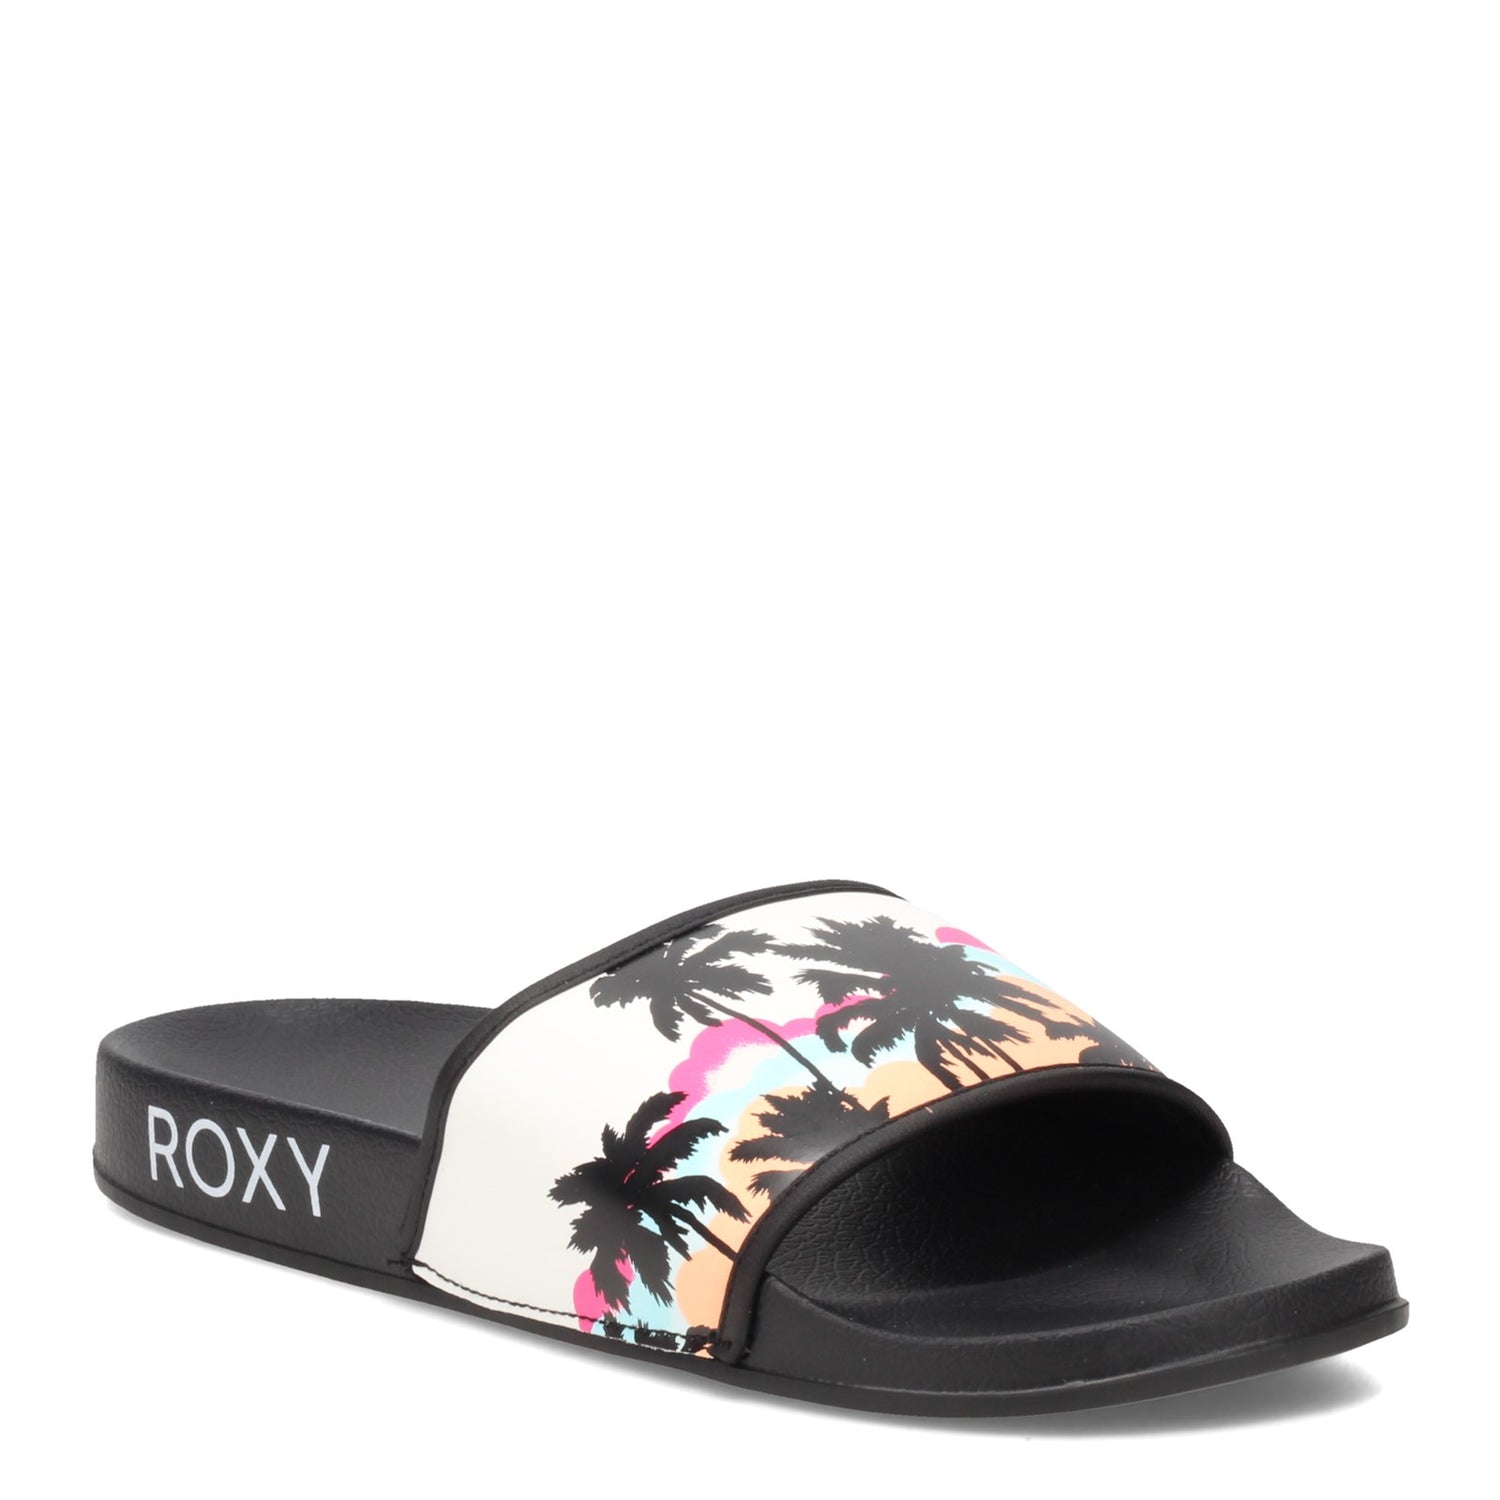 Roxy Women's Slippy Jelly Shoes